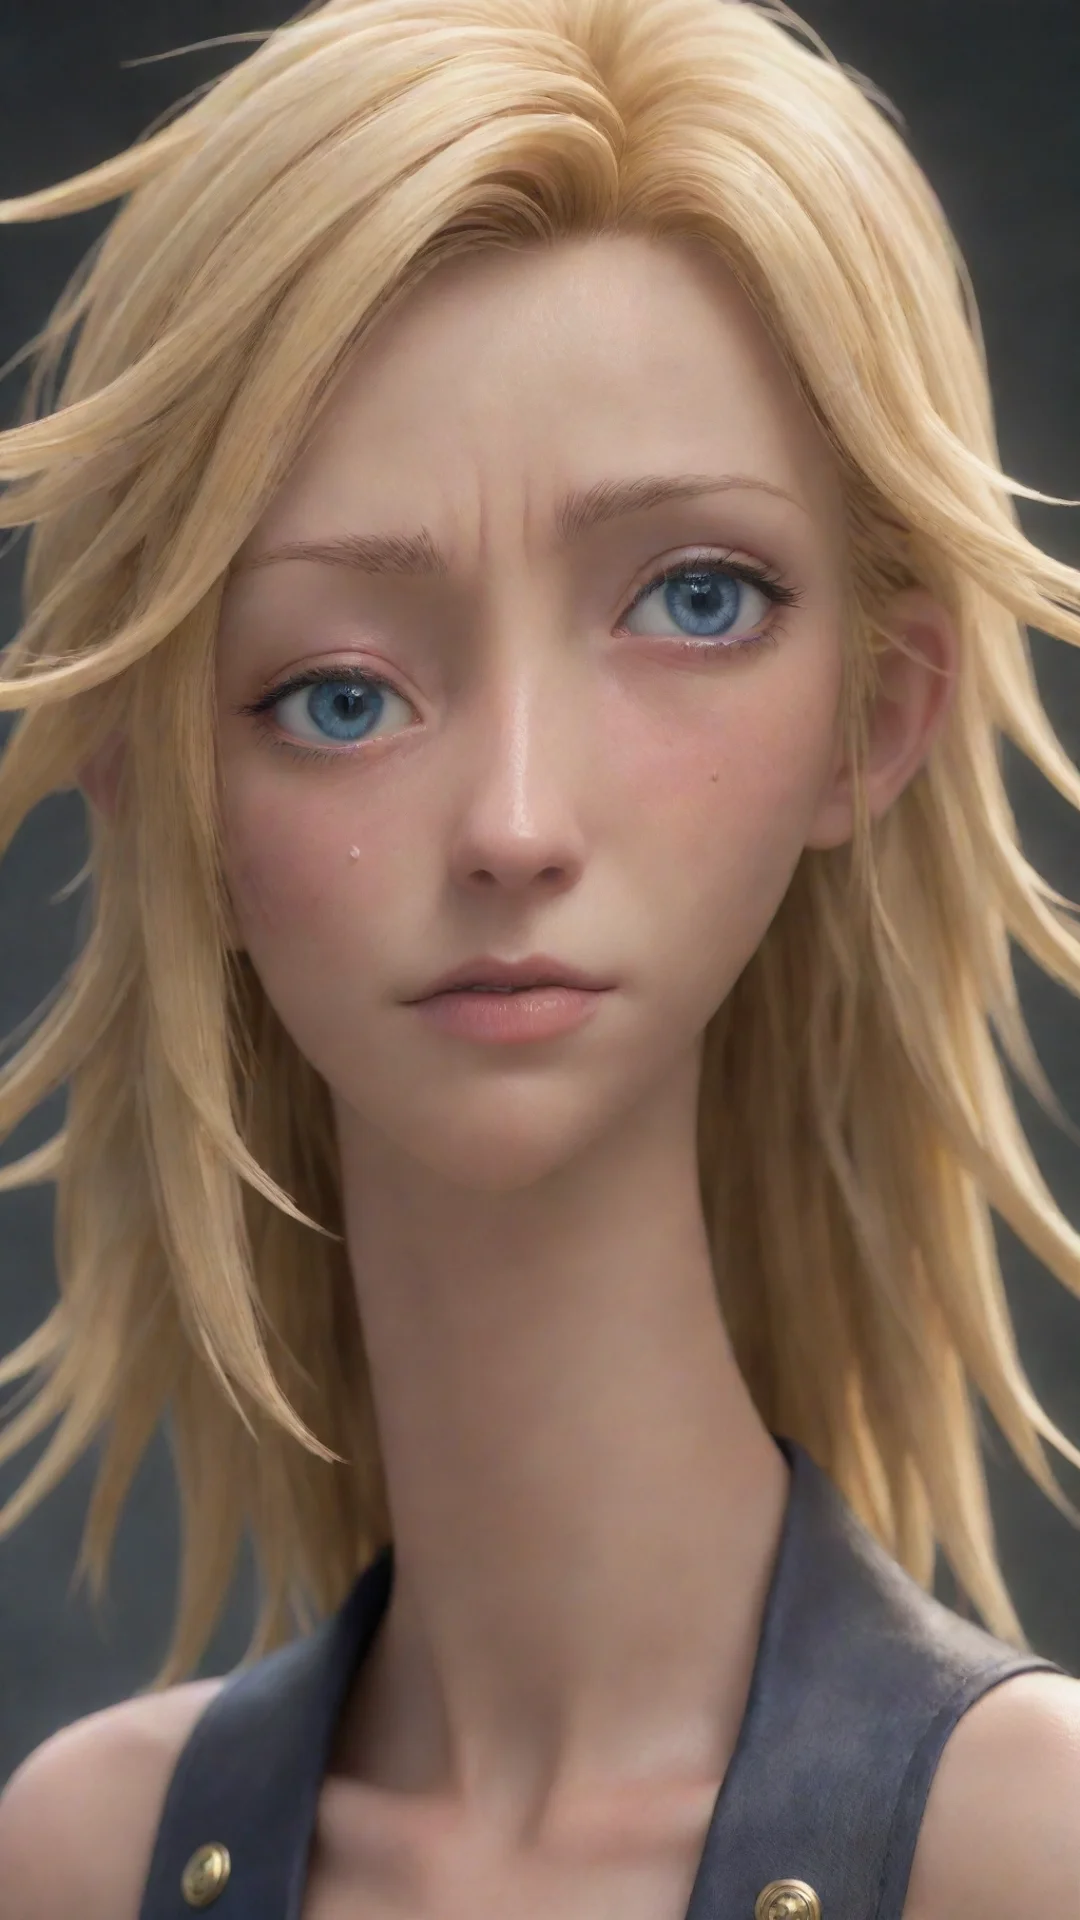 aiamazing portrait of crying public amano5 final fantasy2 artstation pixar render ar 916 awesome portrait 2 tall